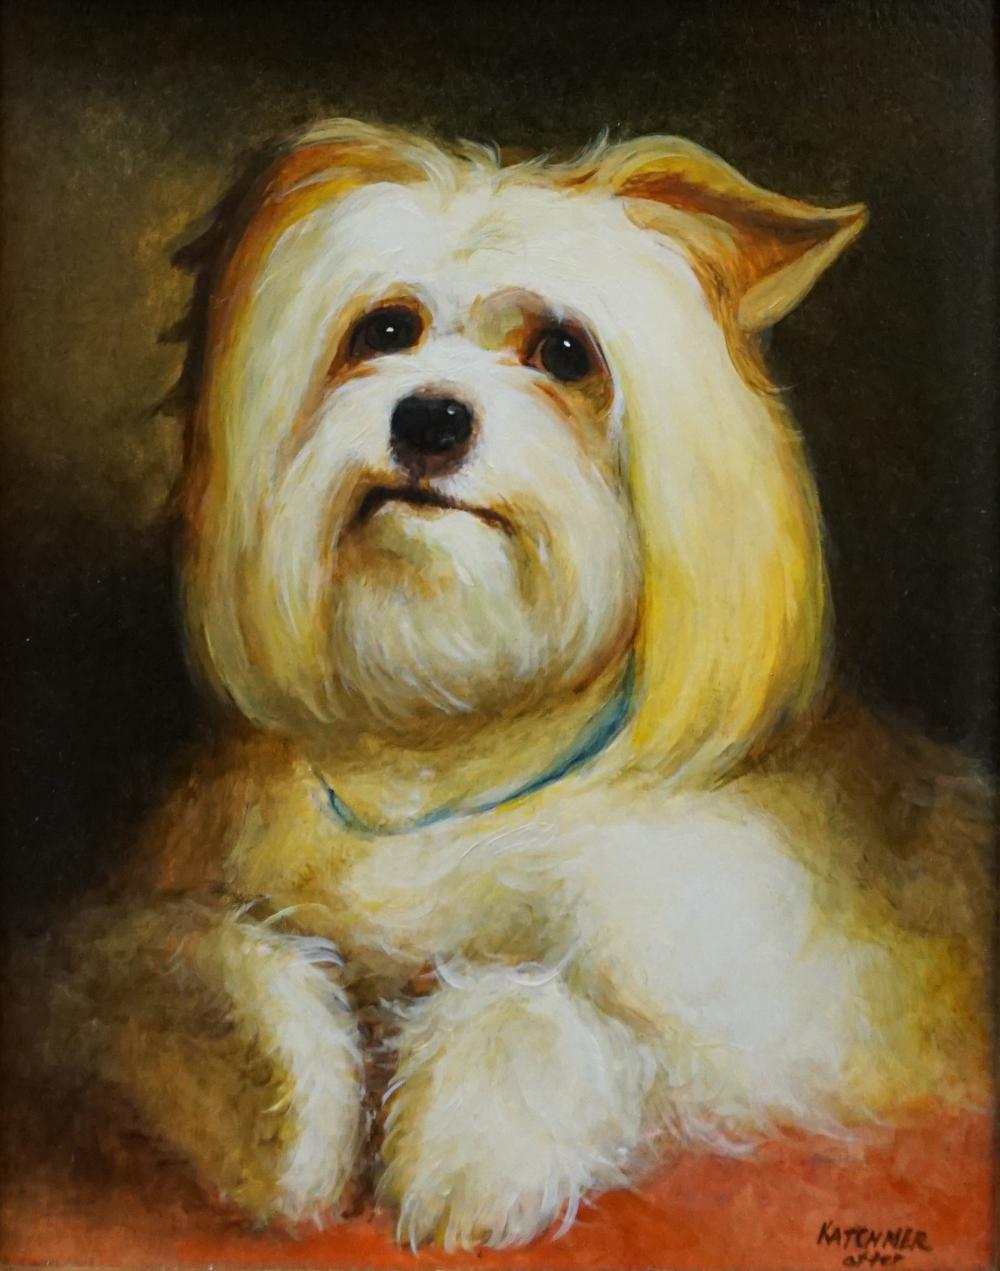 KACHMER, PORTRAIT OF A DOG, OIL